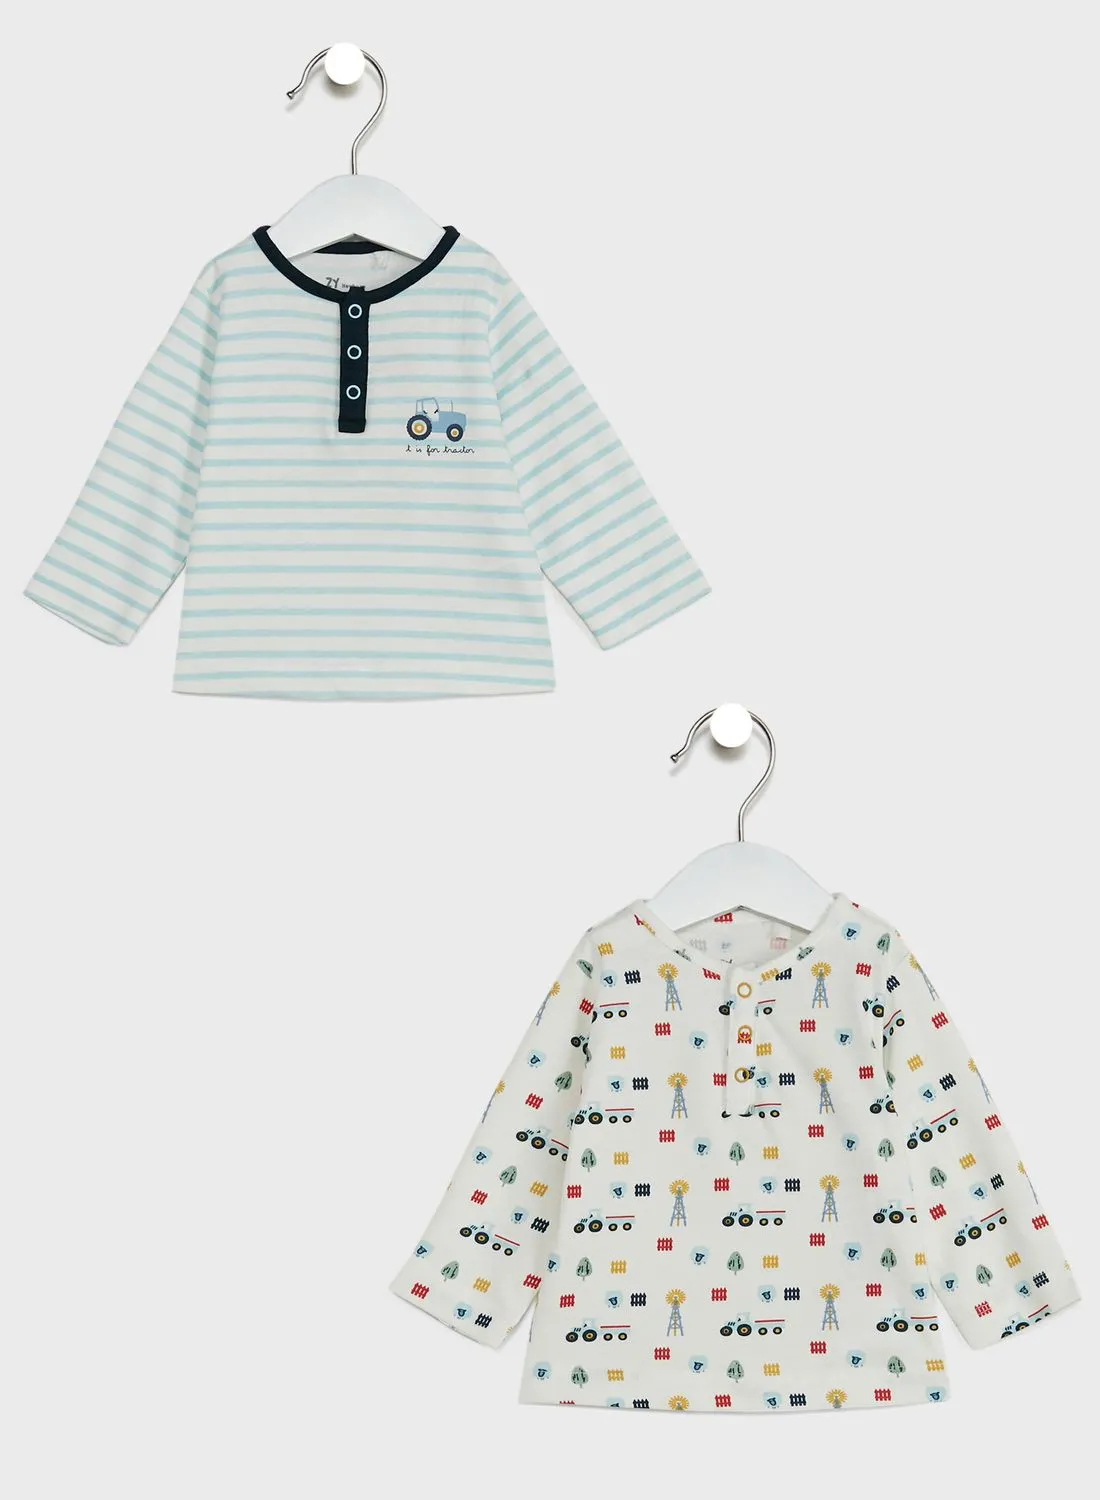 Zippy Infant 2 Pack Striped T-Shirt